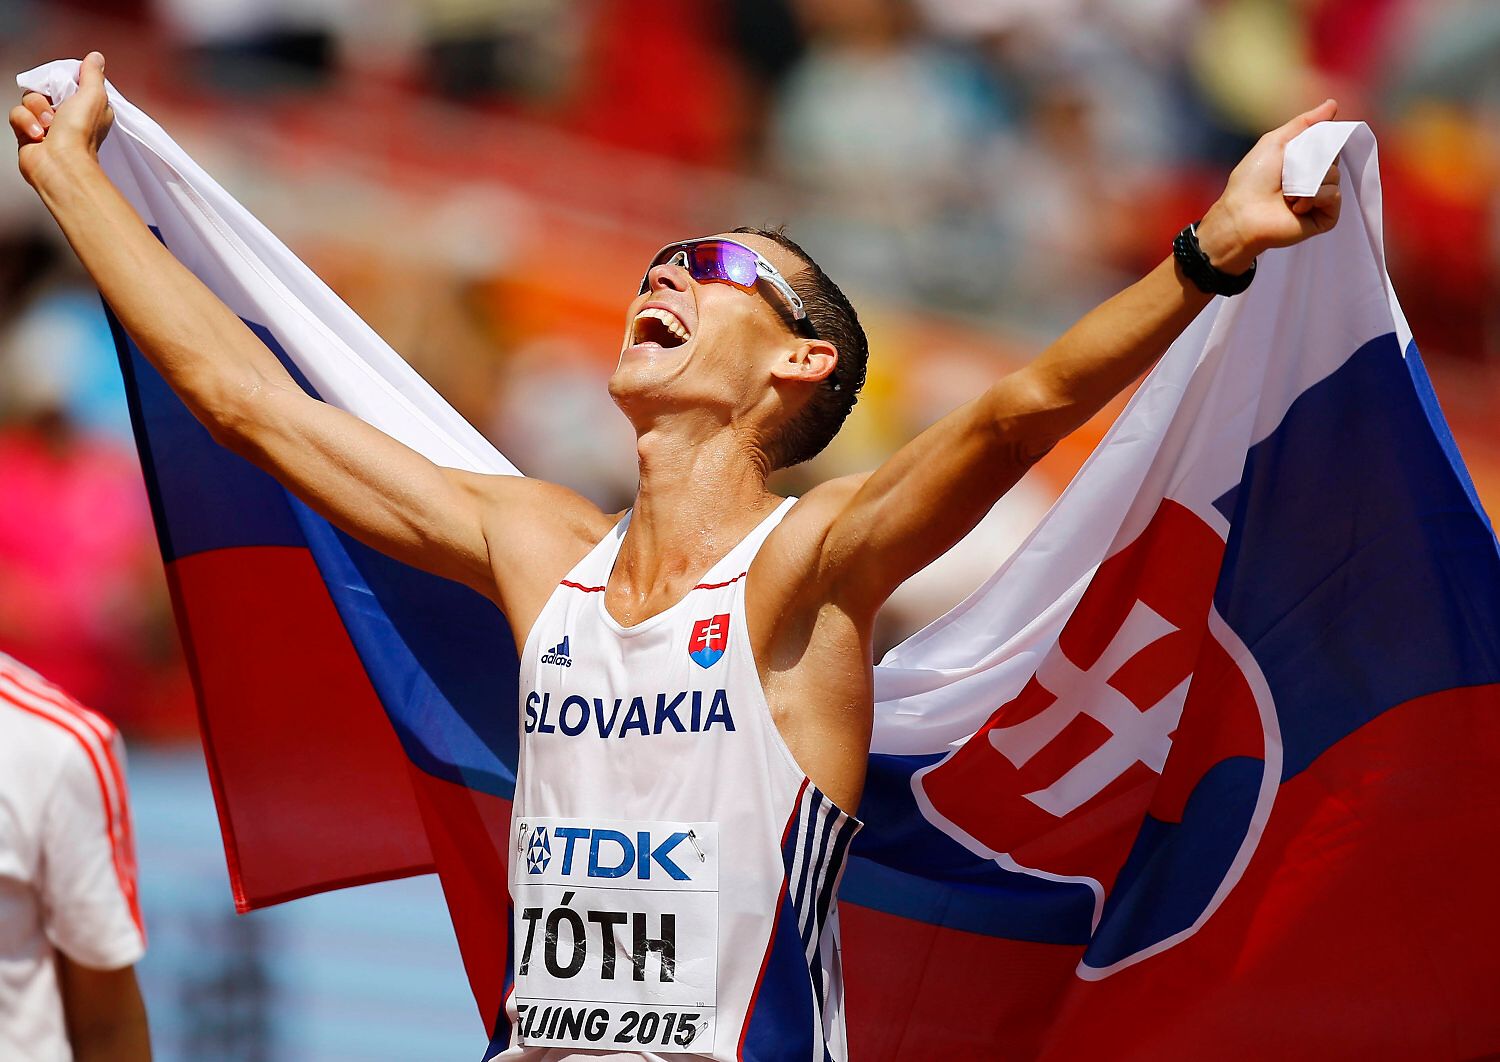 Chodecký šampion Tóth nedopoval, uznala atletická federace